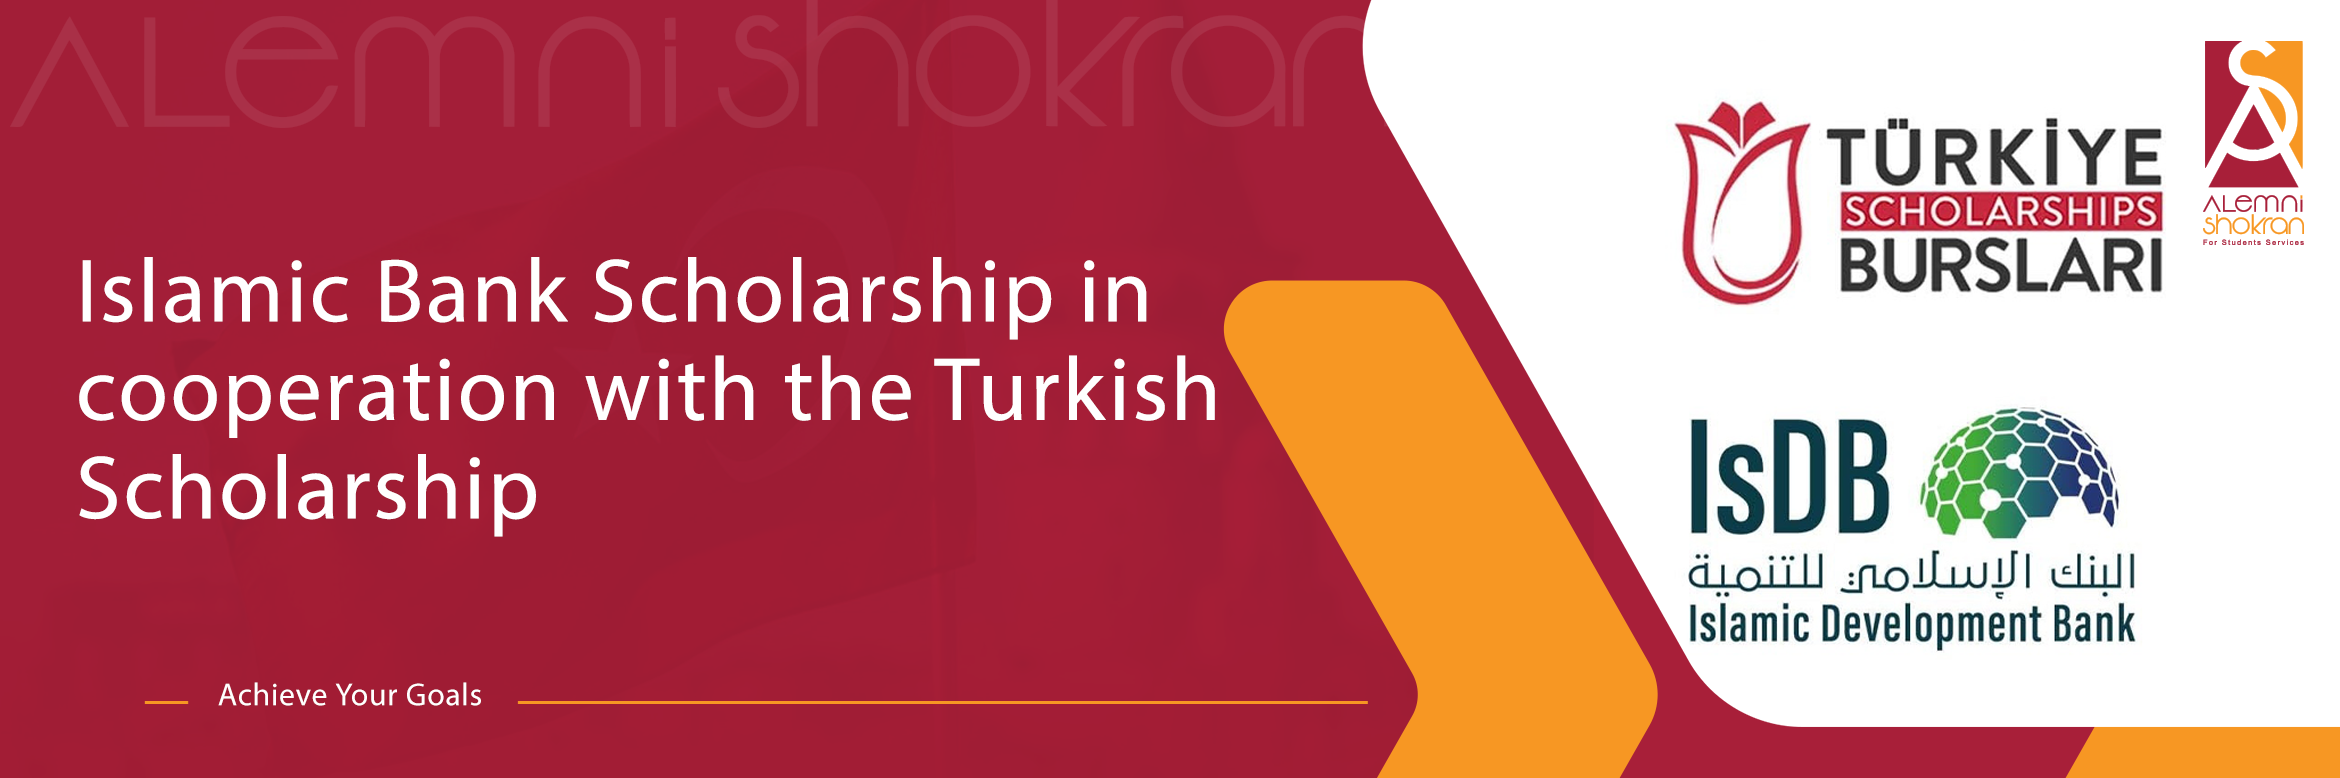 Islamic Bank Scholarship